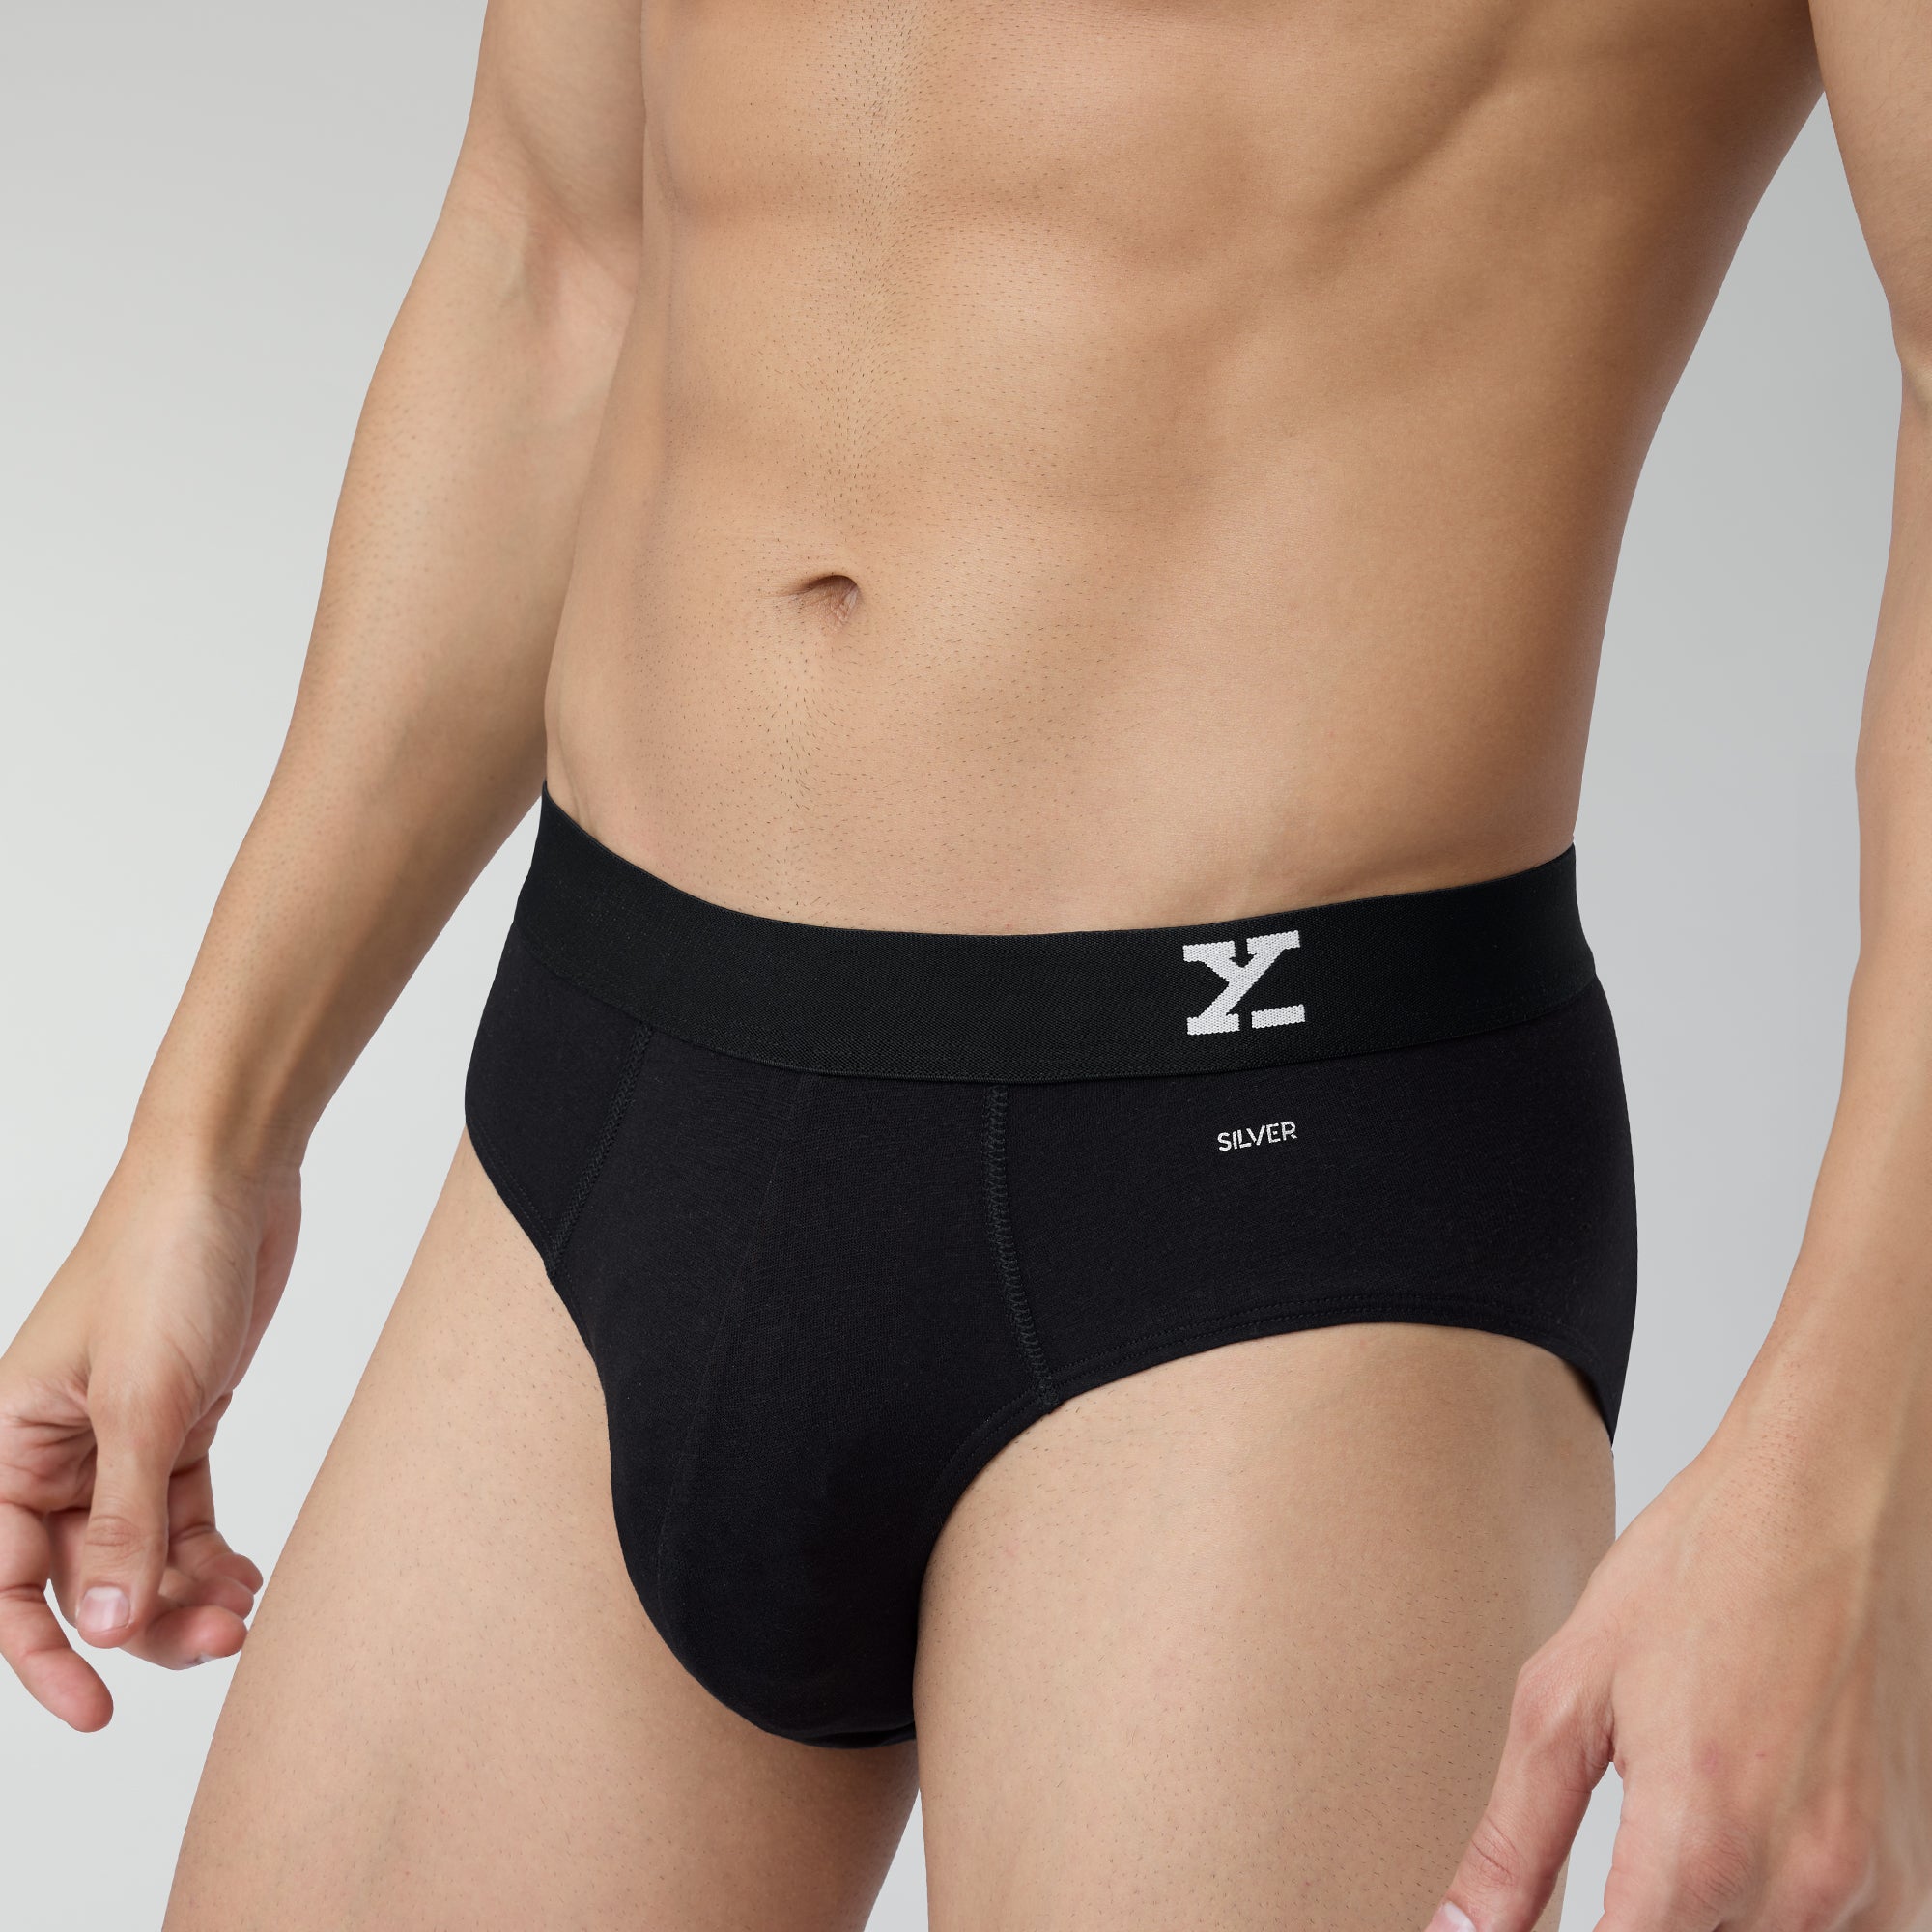 Plain XYXX Intellistretch Super Combed Cotton Aero Brief Underwear